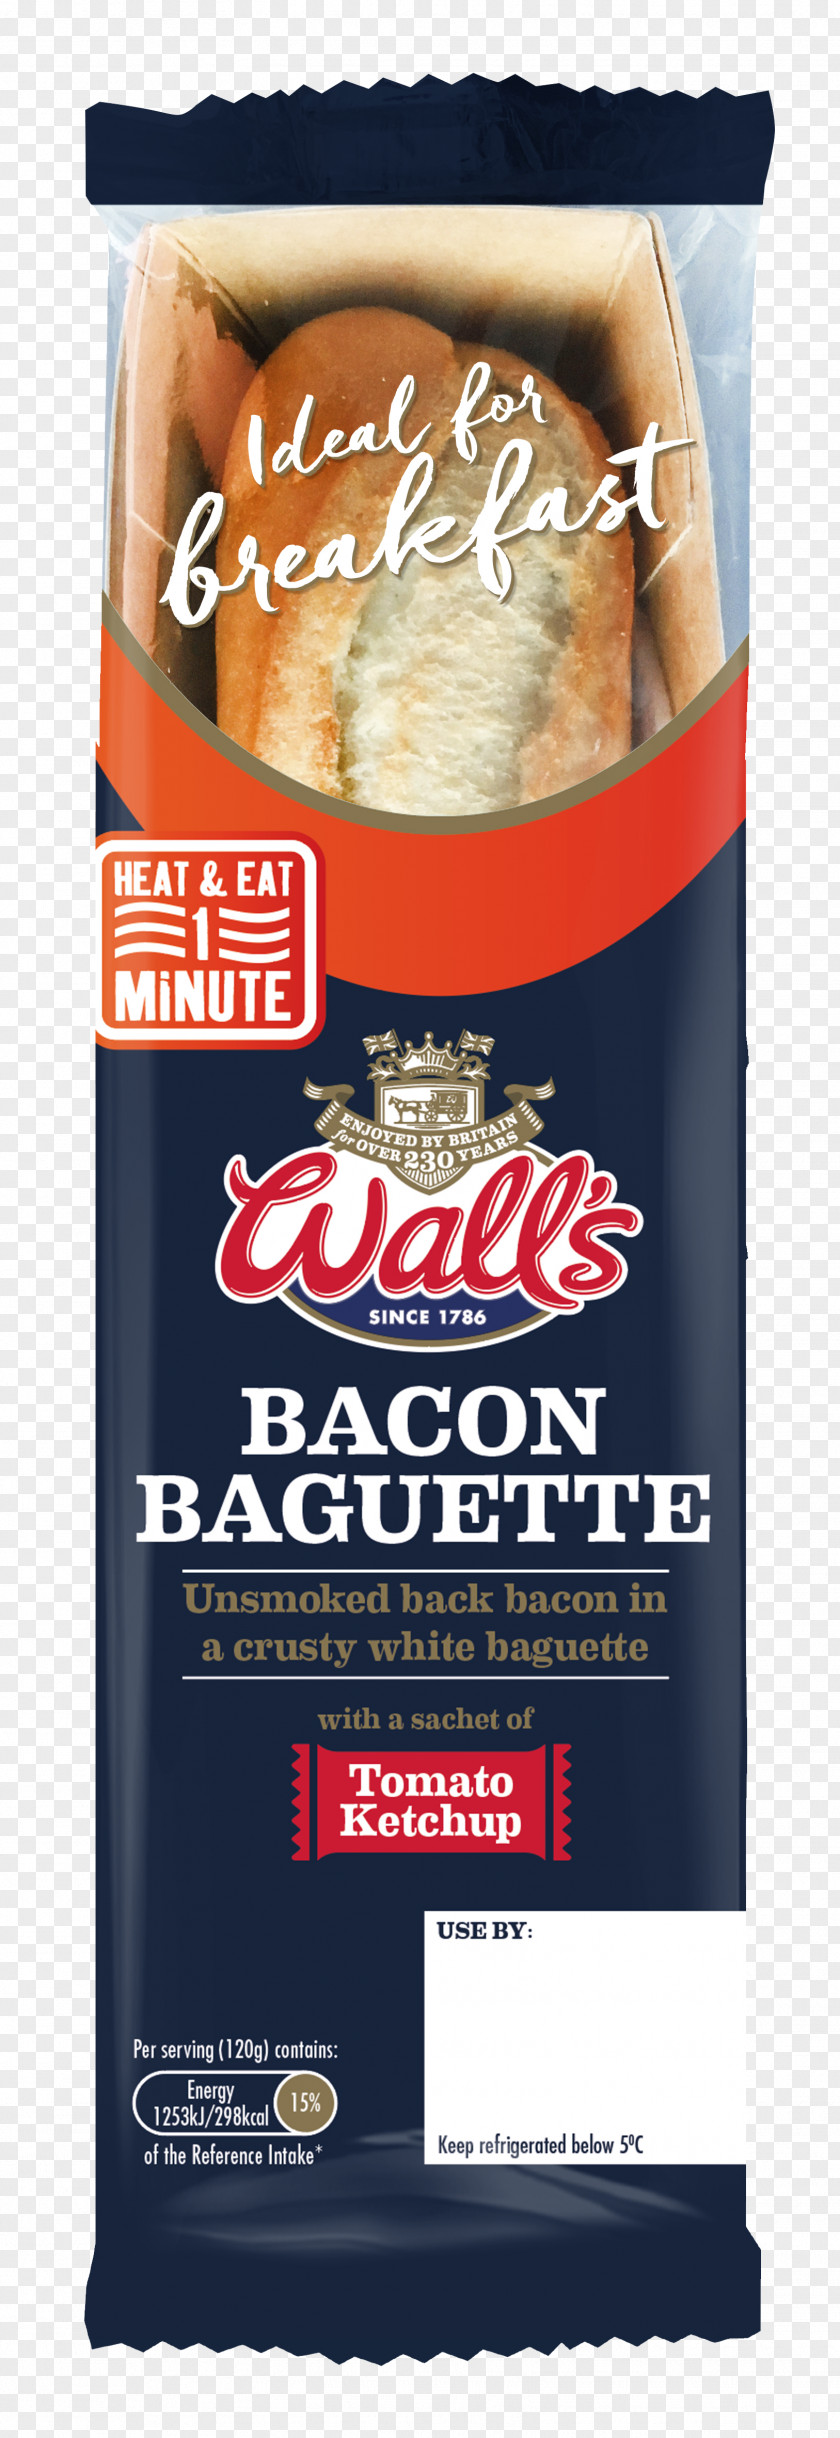 Bacon Baguette Muffin Breakfast Roll PNG